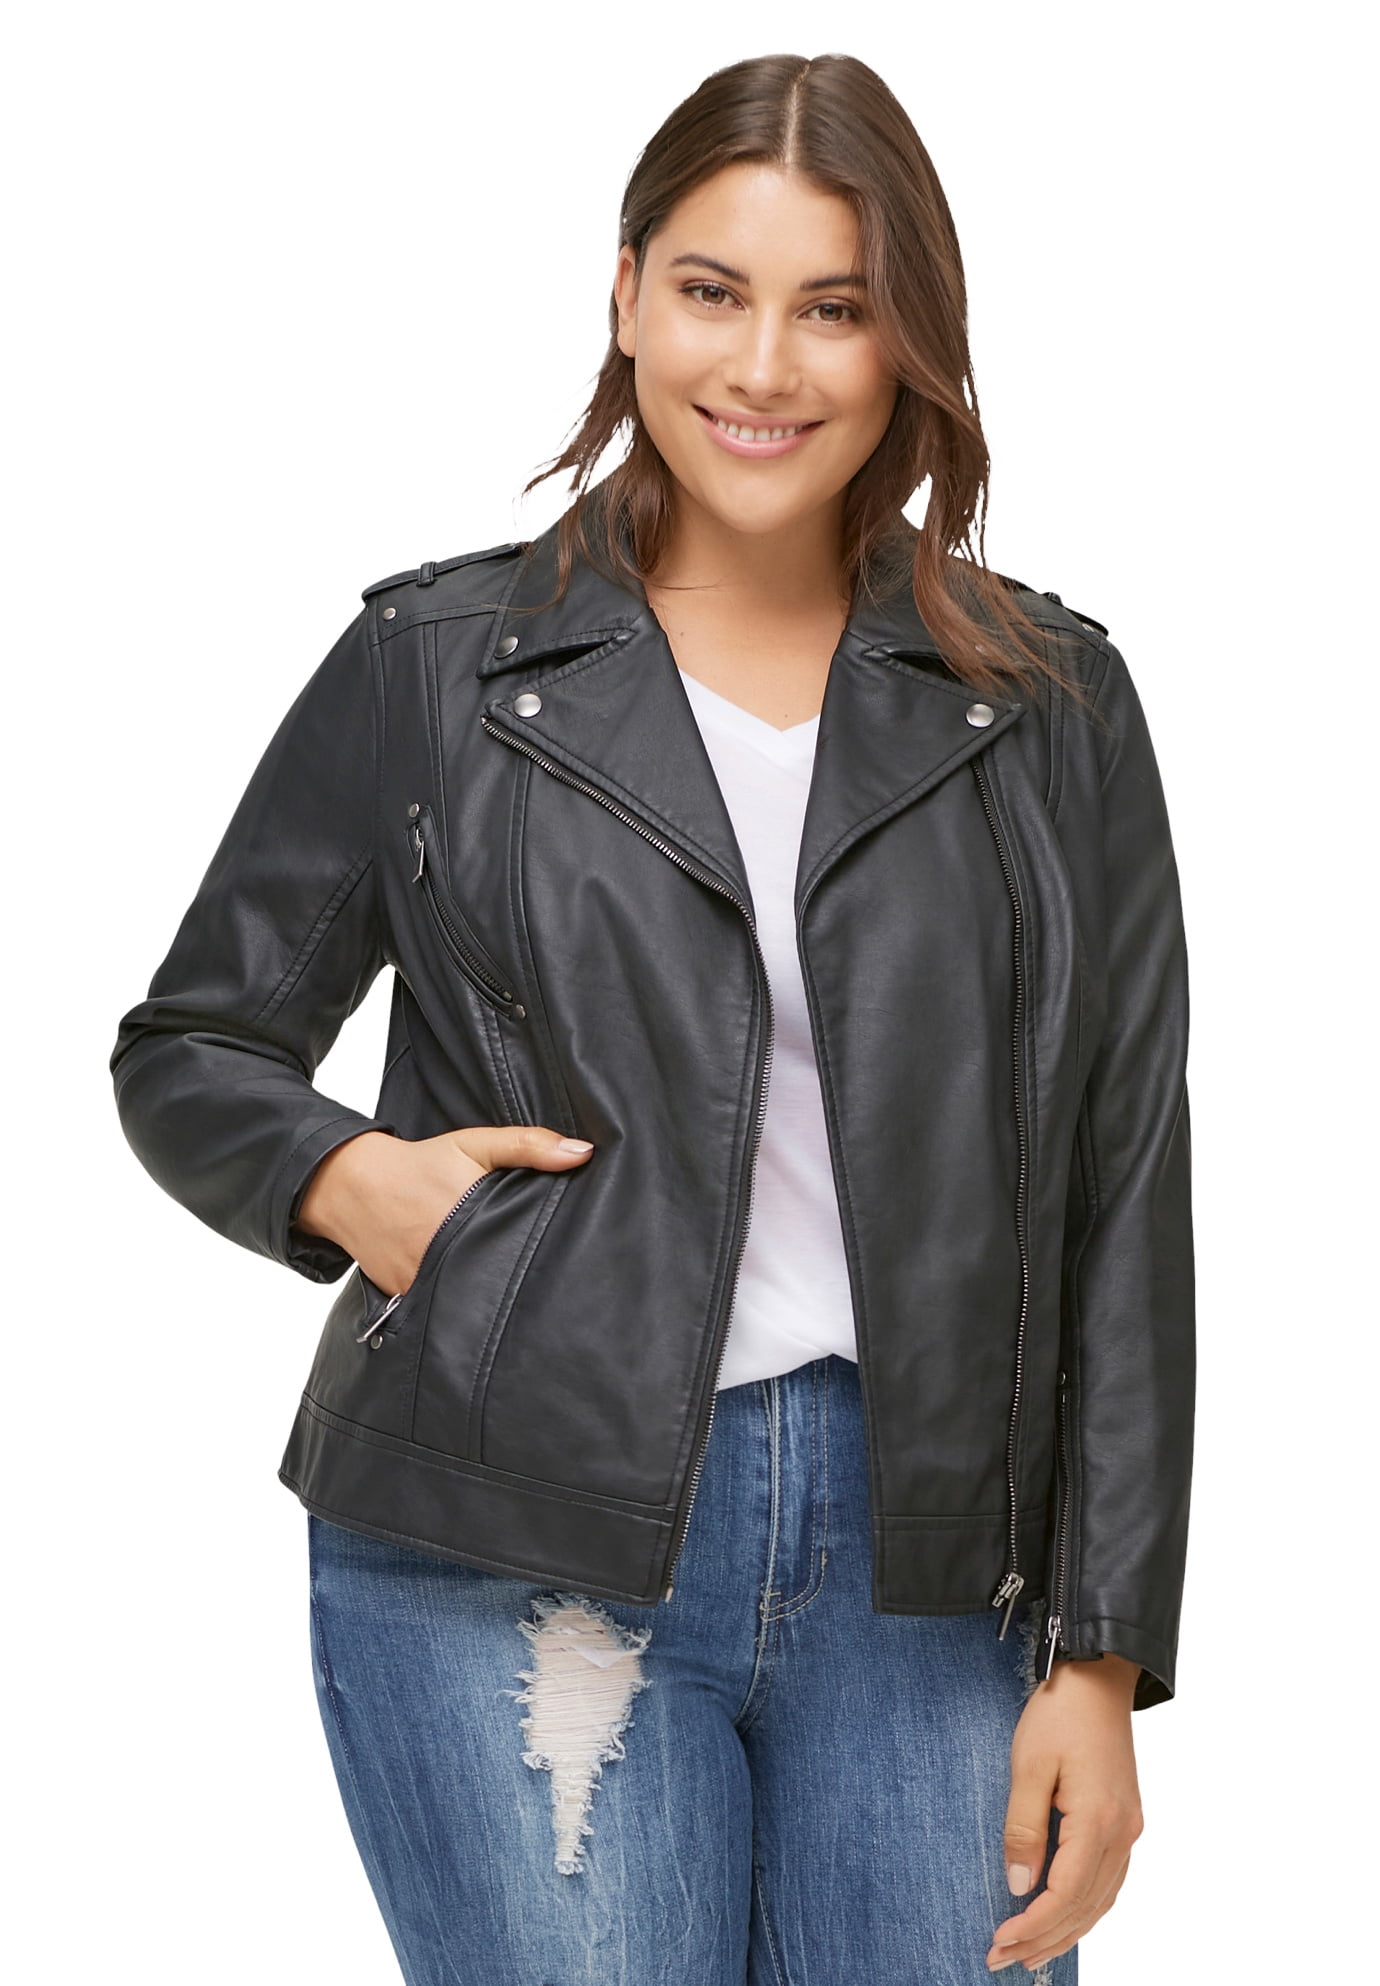 dominere jug Regnskab ellos Women's Plus Size Faux Leather Moto Jacket - 16, Black - Walmart.com